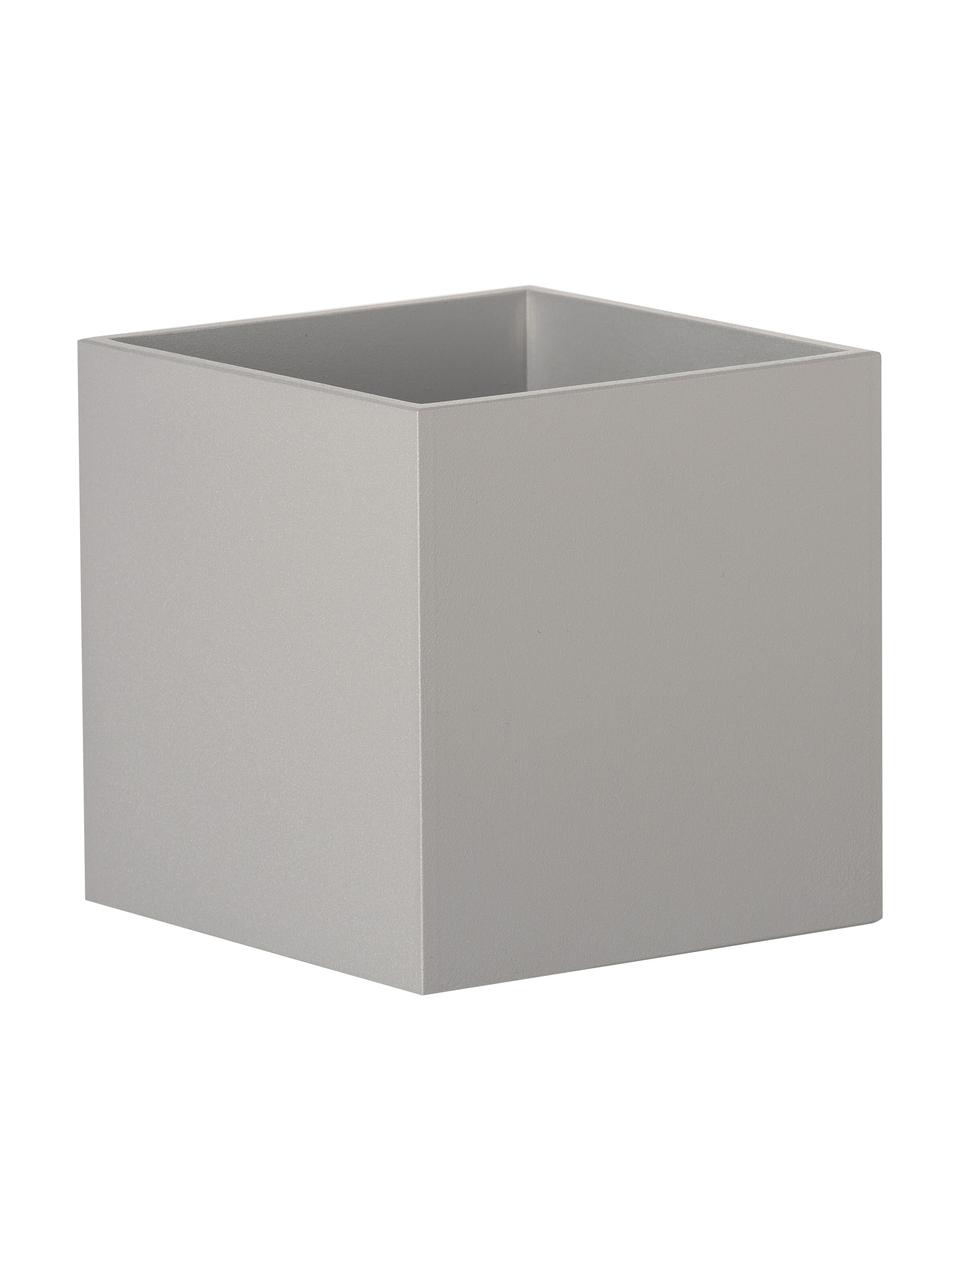 Kleine Wandleuchte Quad in Grau, Lampenschirm: Aluminium, pulverbeschich, Grau, B 10 x H 10 cm